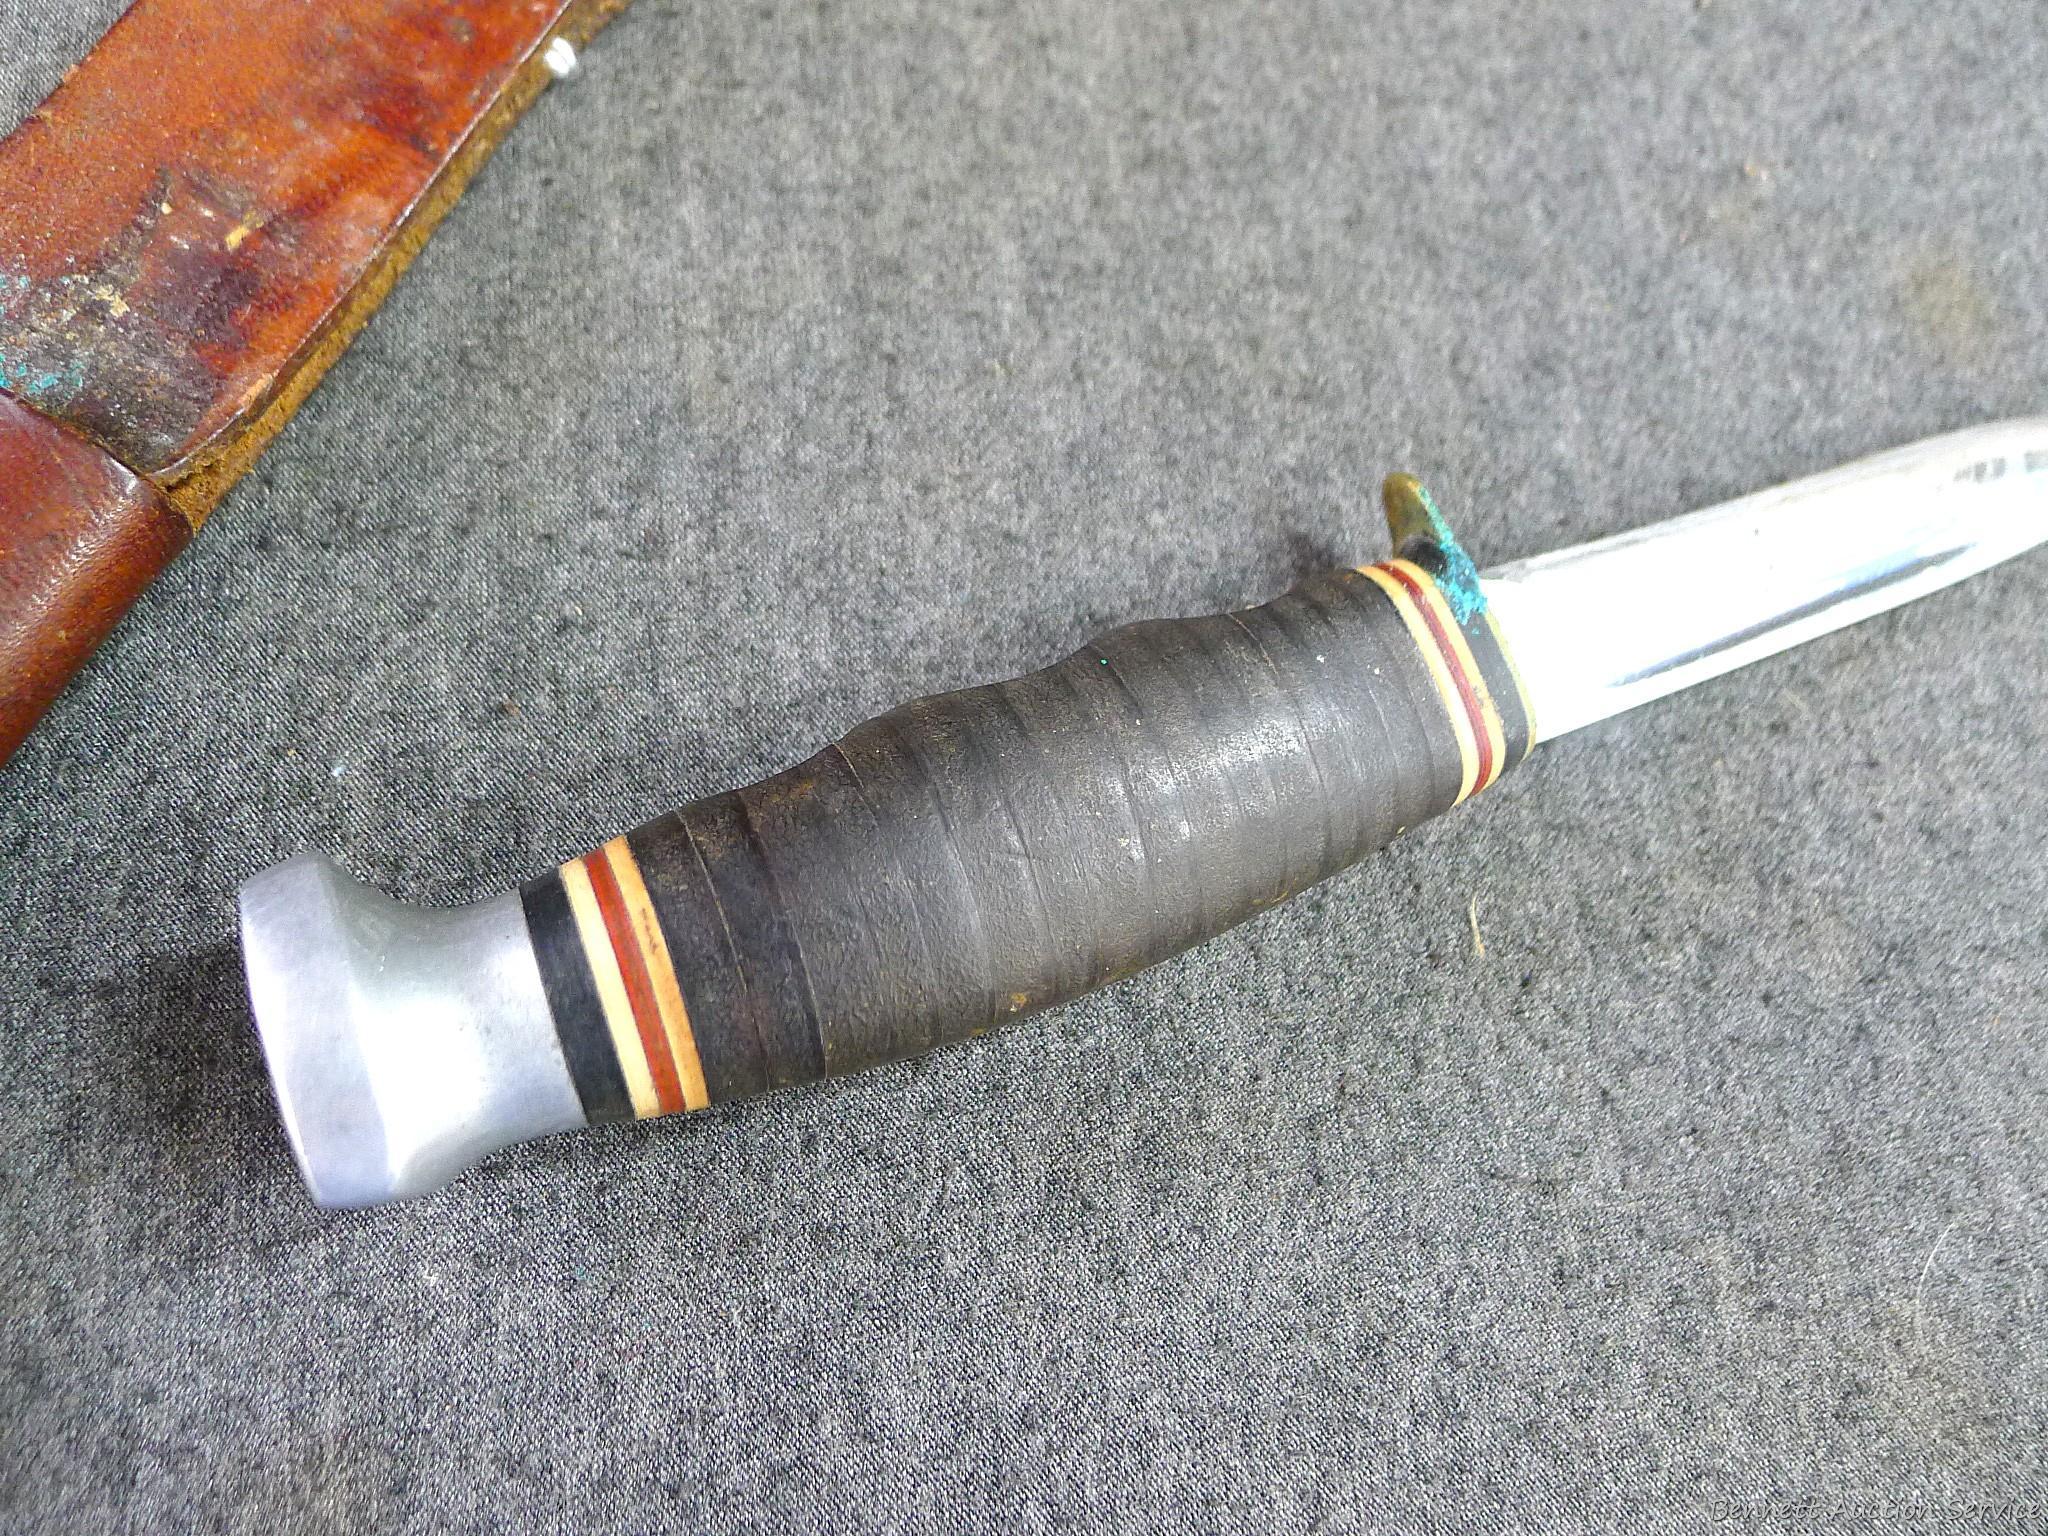 8" Kabar fixed blade knife with leather sheath.